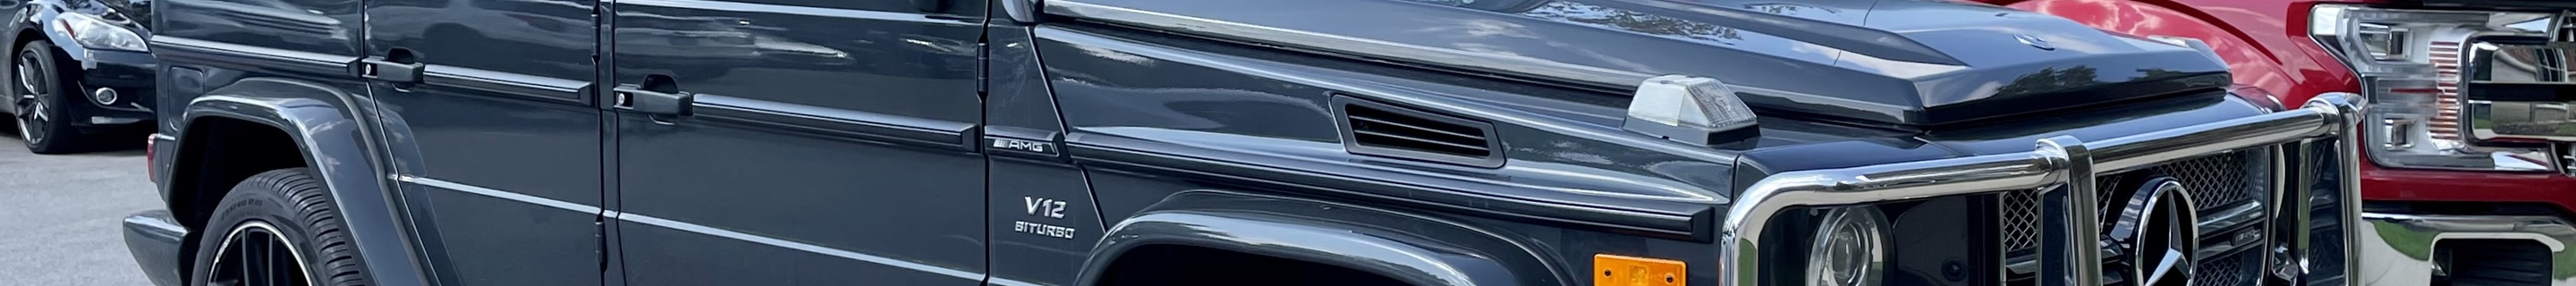 Mercedes-AMG G 65 2016